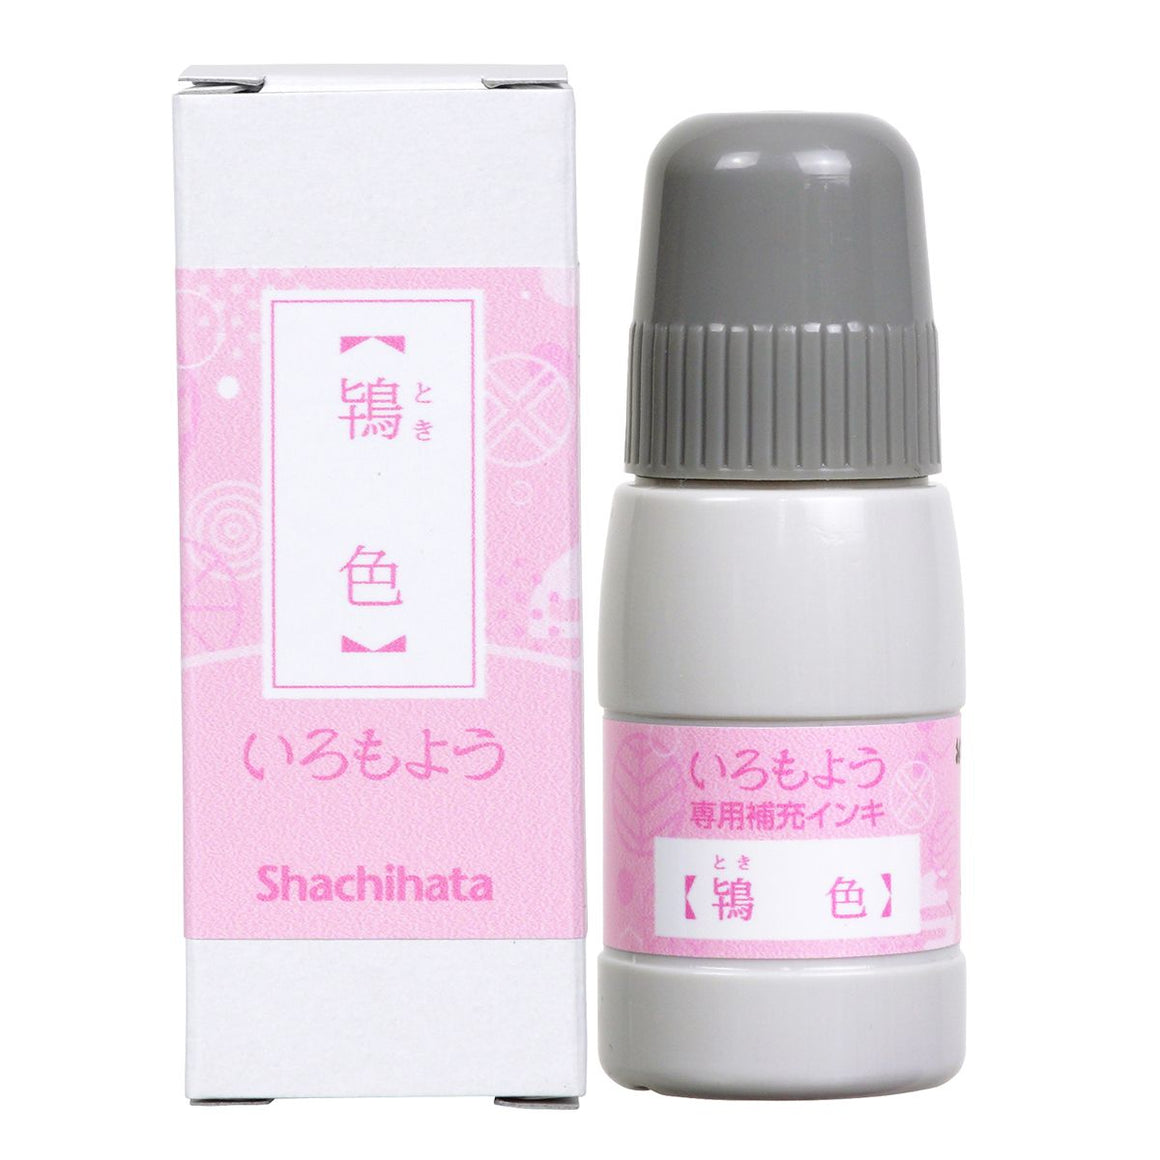 REFILL: Shachihata Iromoyo Ink Refill Bottle - Tokiiro 鴇色 - SAC-20-PP